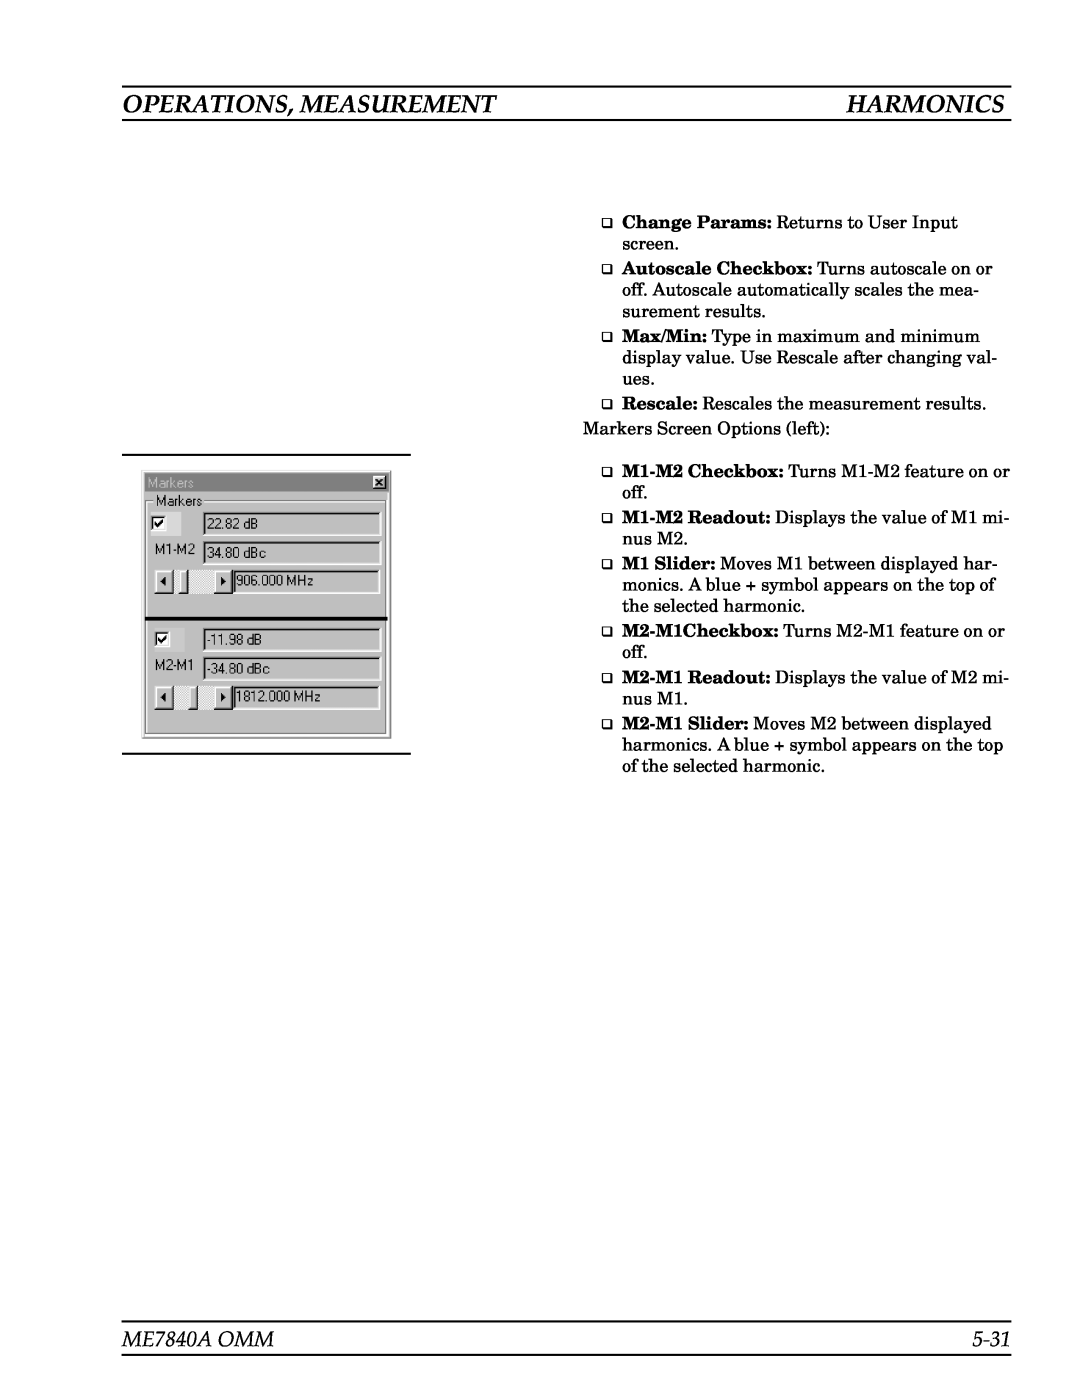 Anritsu manual 5-31, Operations, Measurement, Harmonics, ME7840A OMM 